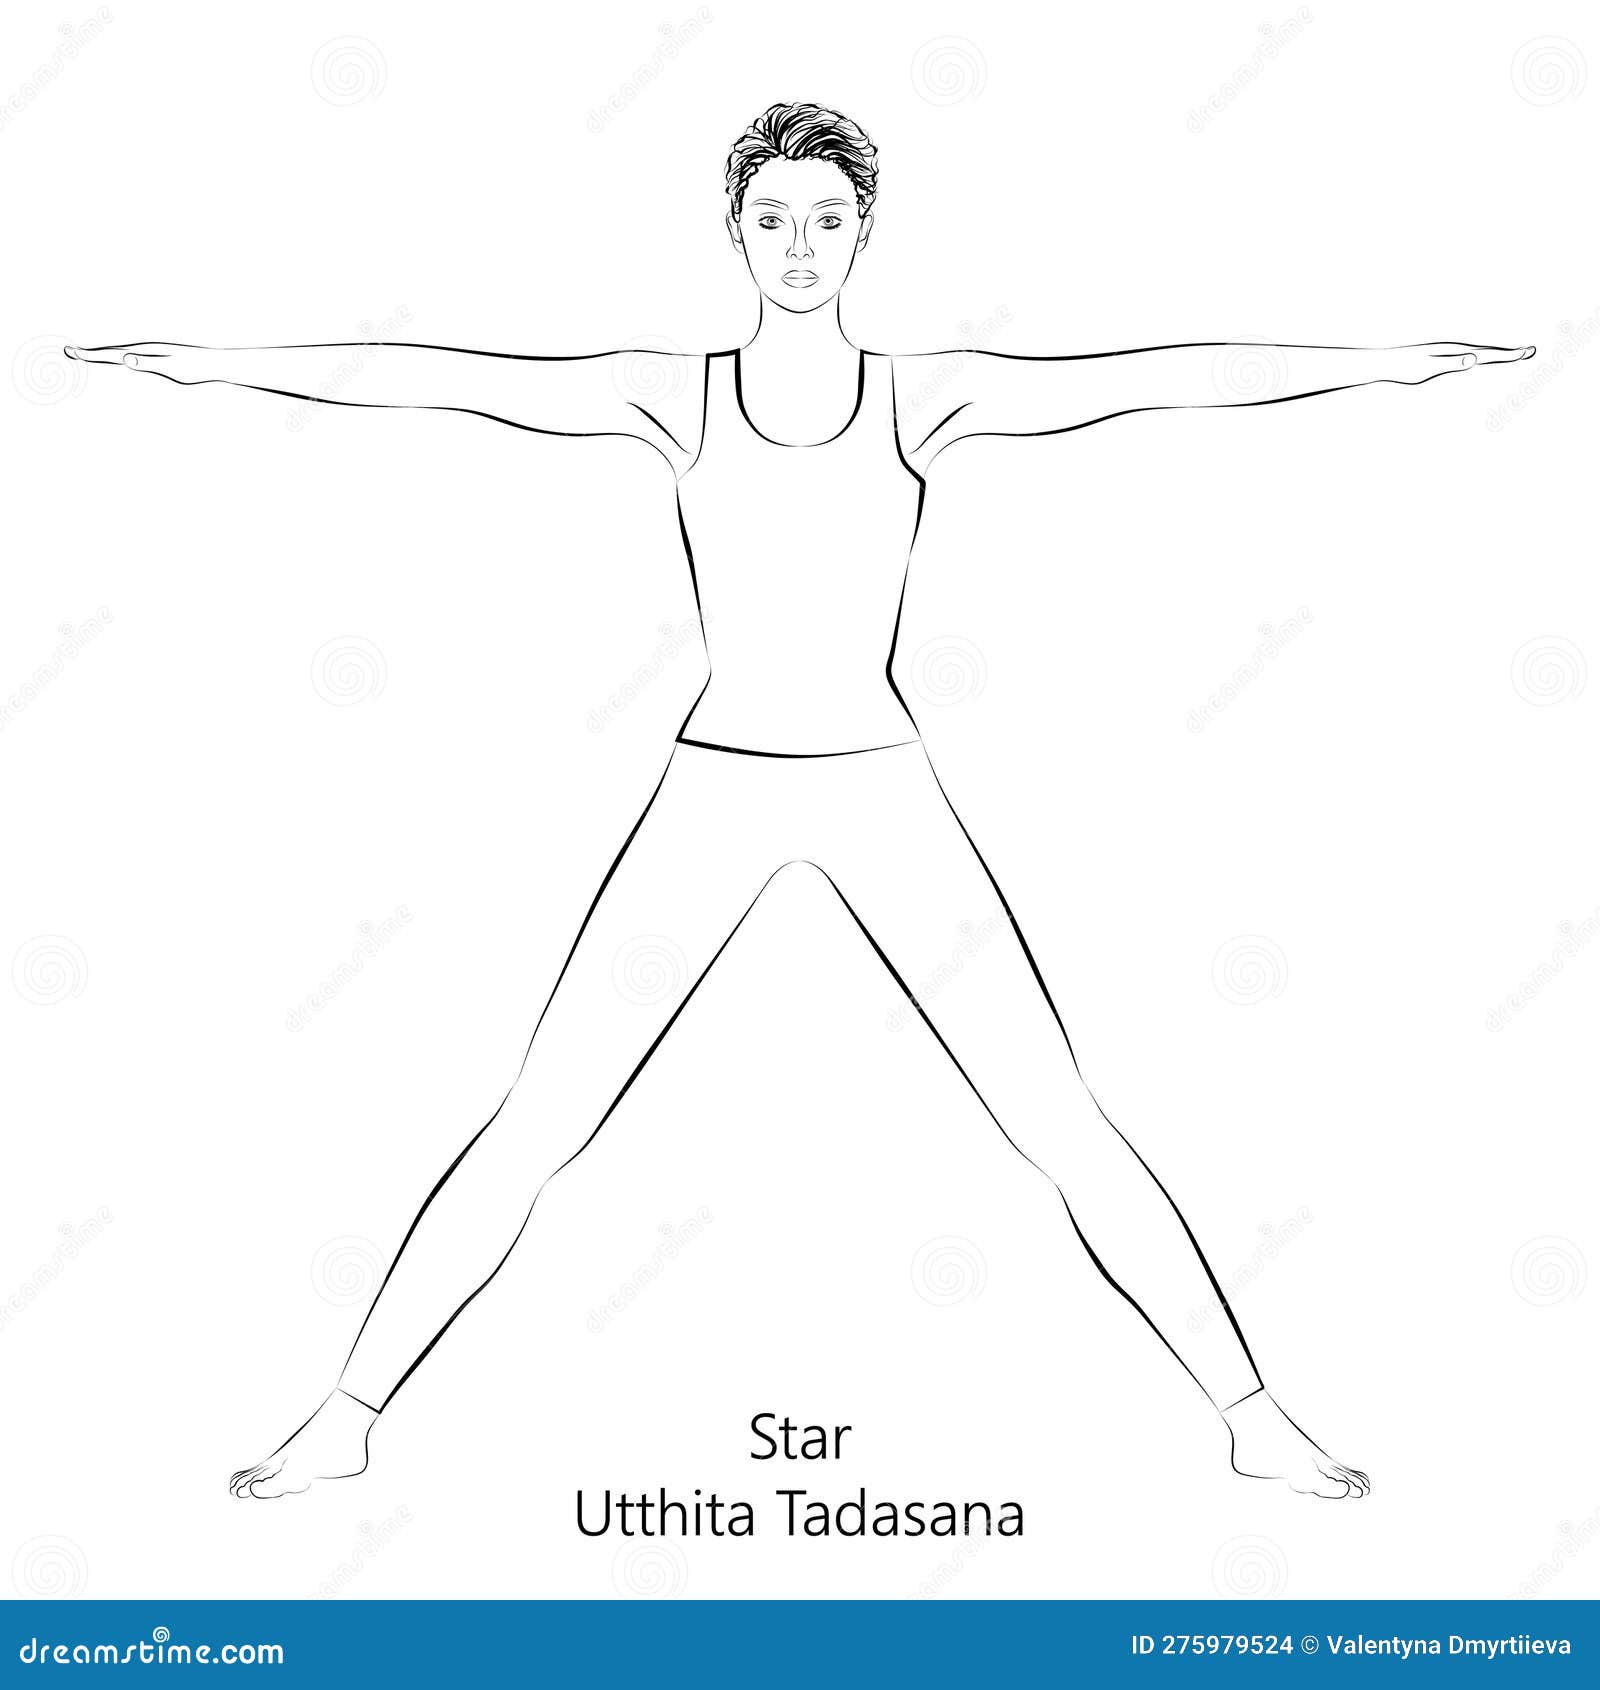 yoga poses - Five Pointed Star position (utthita tadasana)… | Flickr